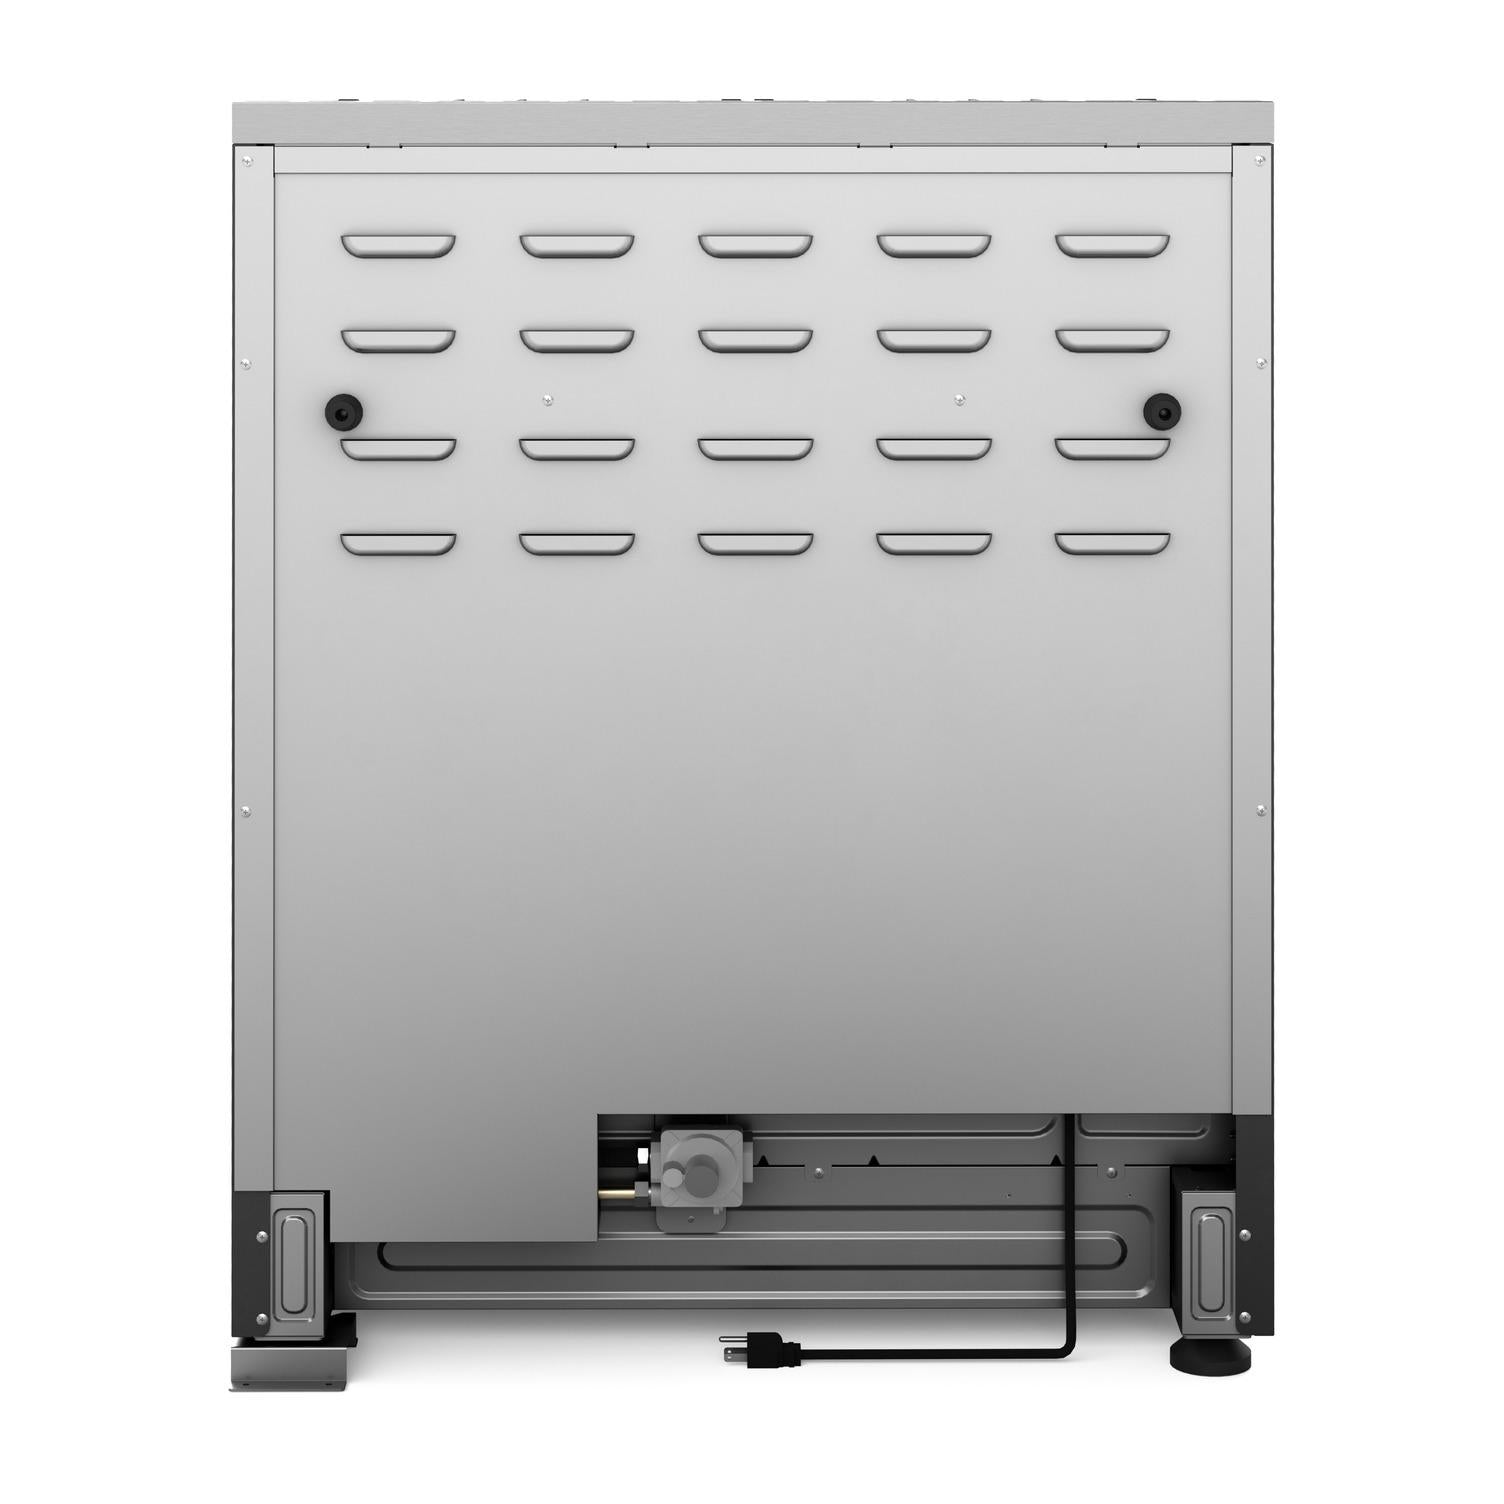 Thor Kitchen 30-inch Contemporary Professional Gas Range - Arg30/arg30lp